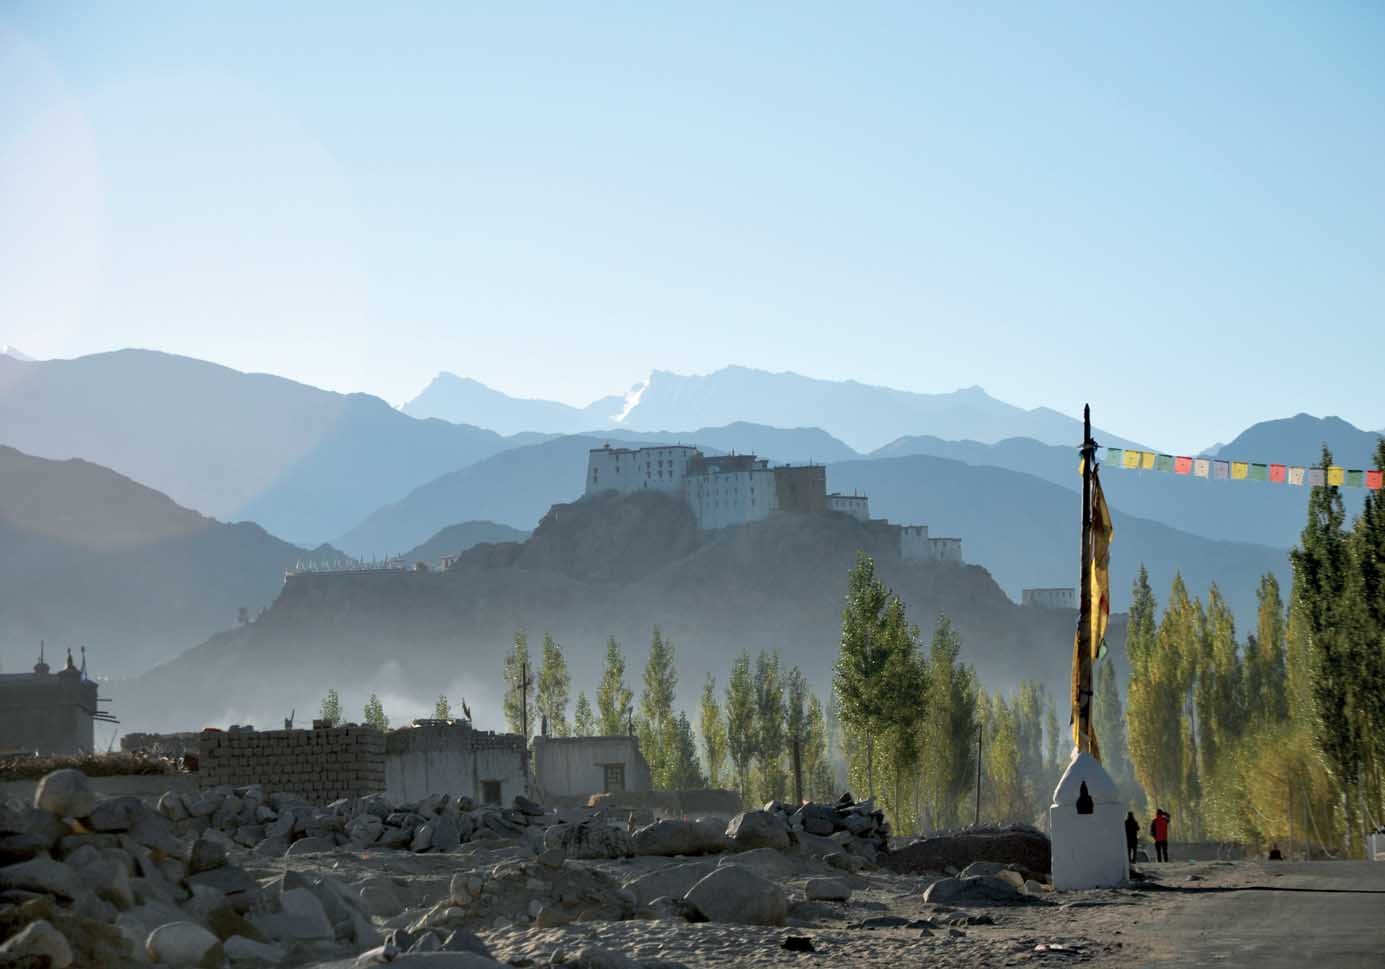 case-regeneration-through-adaptive-reuse-typical-ladakhi-landscape